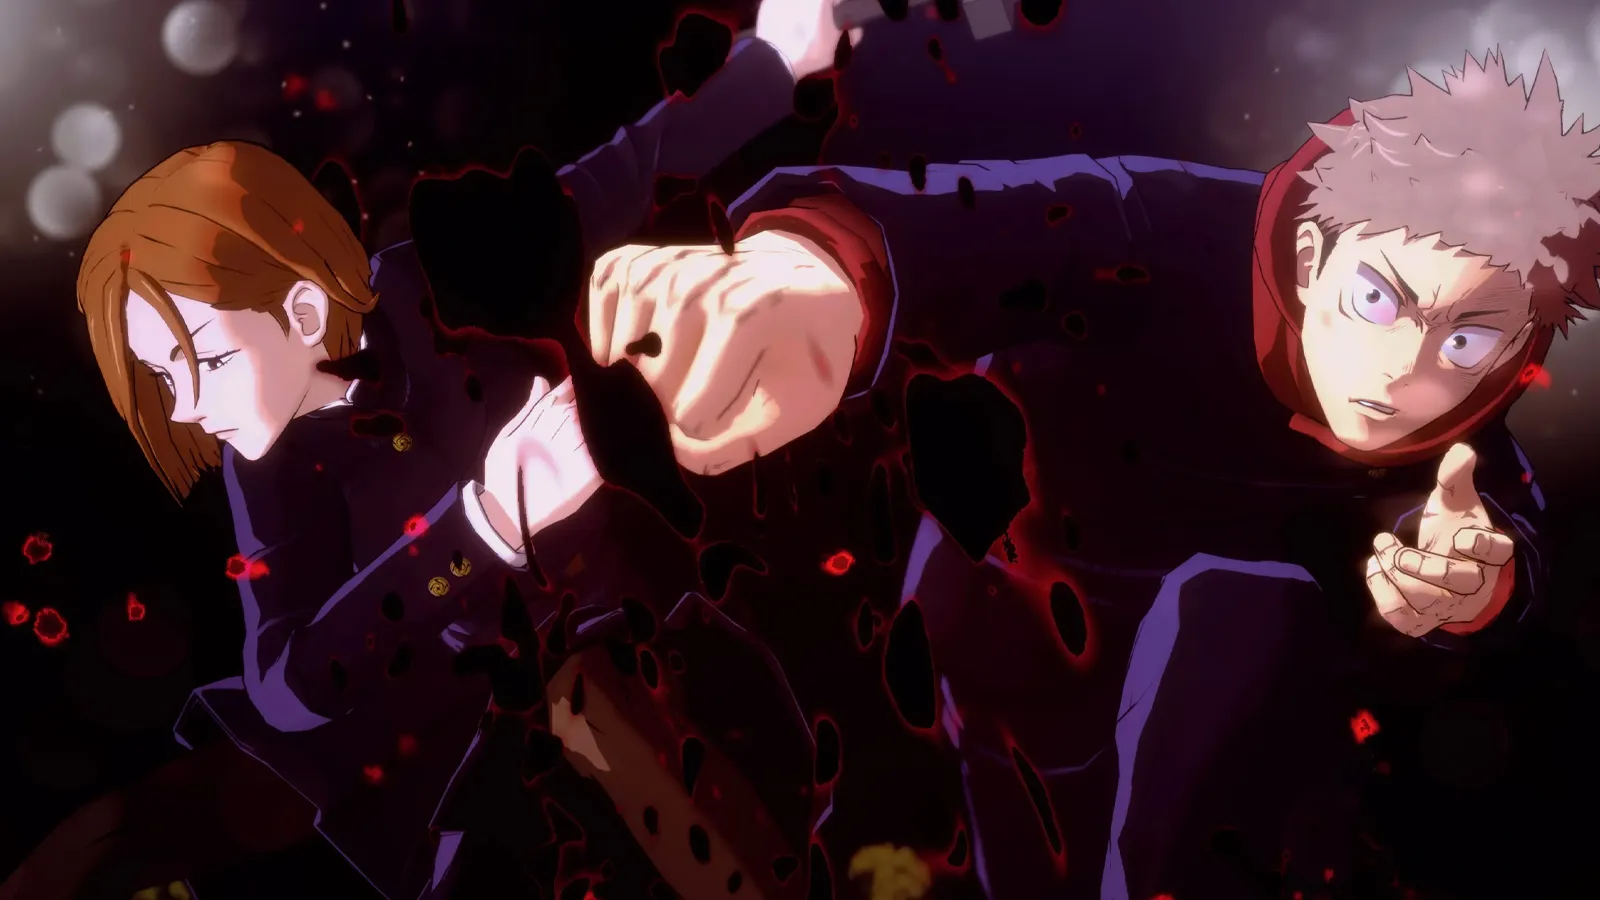 Bandai Namco announce Jujutsu Kaisen Cursed Clash anime brawler